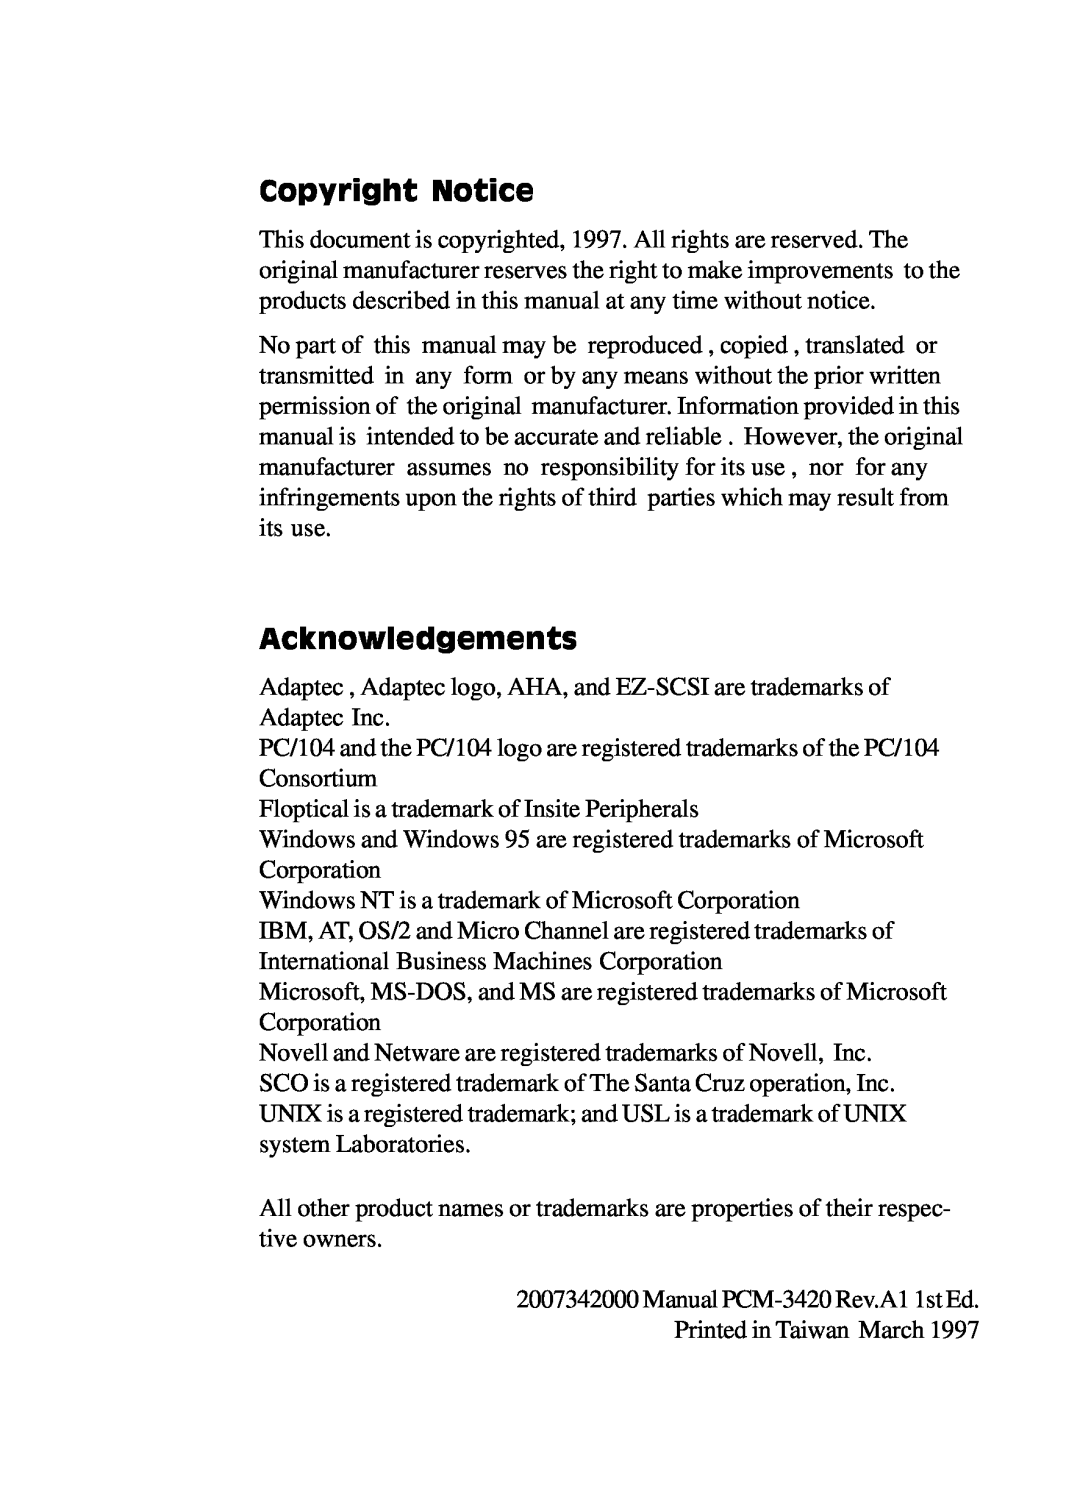 Adaptec PC/104, PCM-3420 manual Copyright Notice, Acknowledgements 